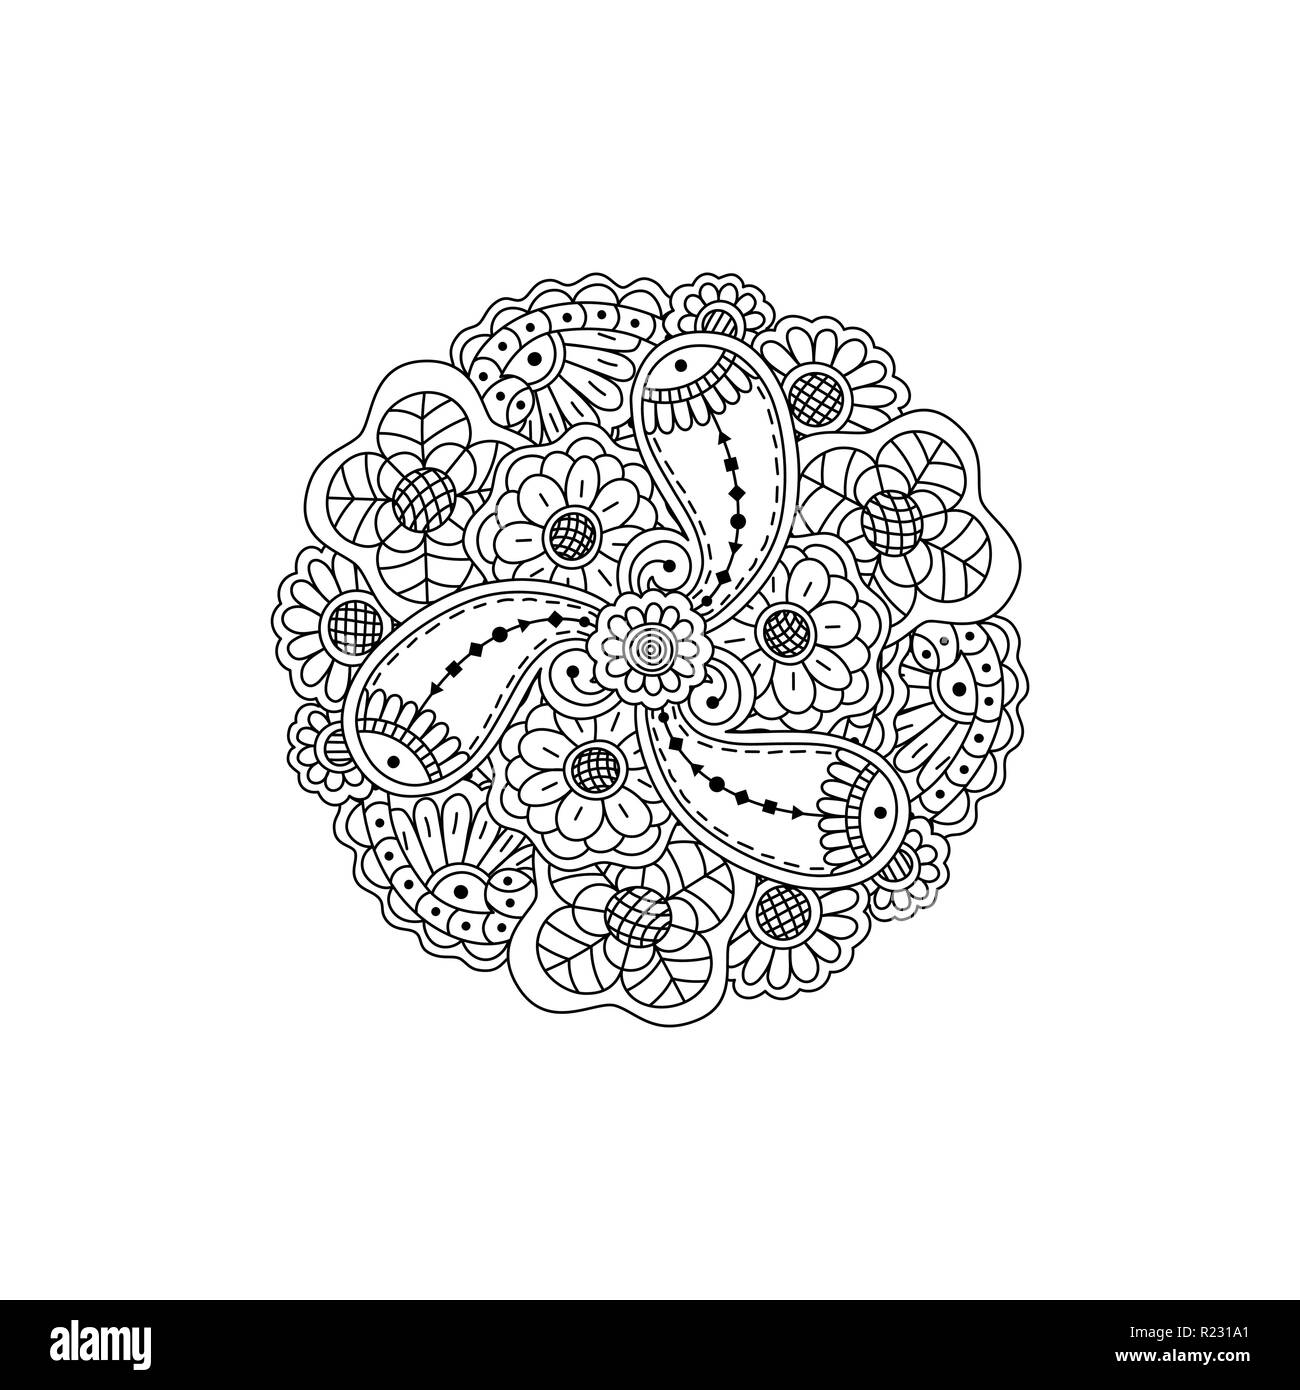 Premium Vector  Mandala anti-stress coloring book page for adults